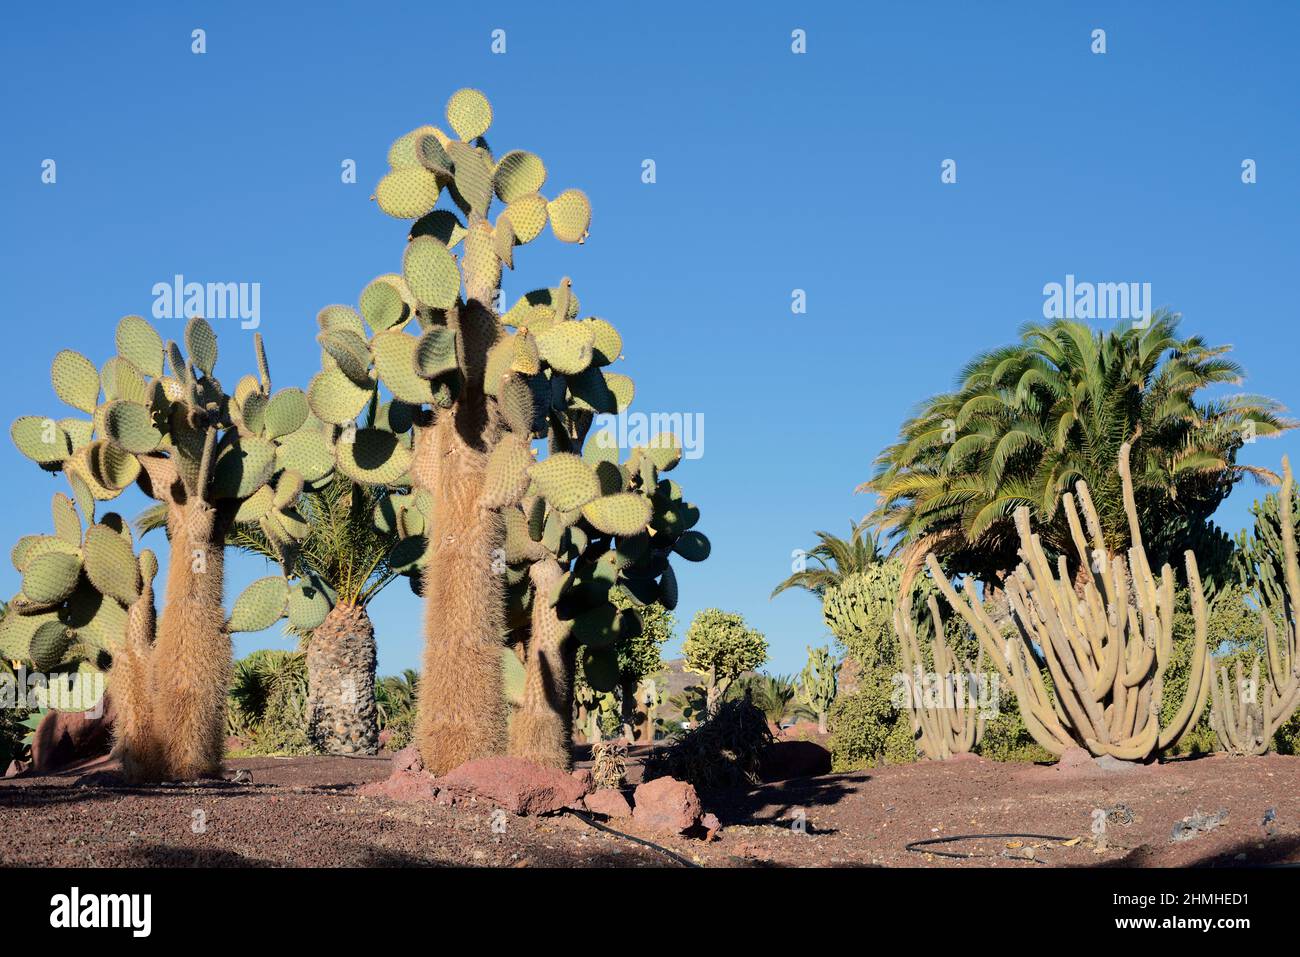 Galapagos Prickly Pero (Opuntia galapageia), cactus e palme in giardino, Fuerteventura, Isole Canarie, Spagna Foto Stock